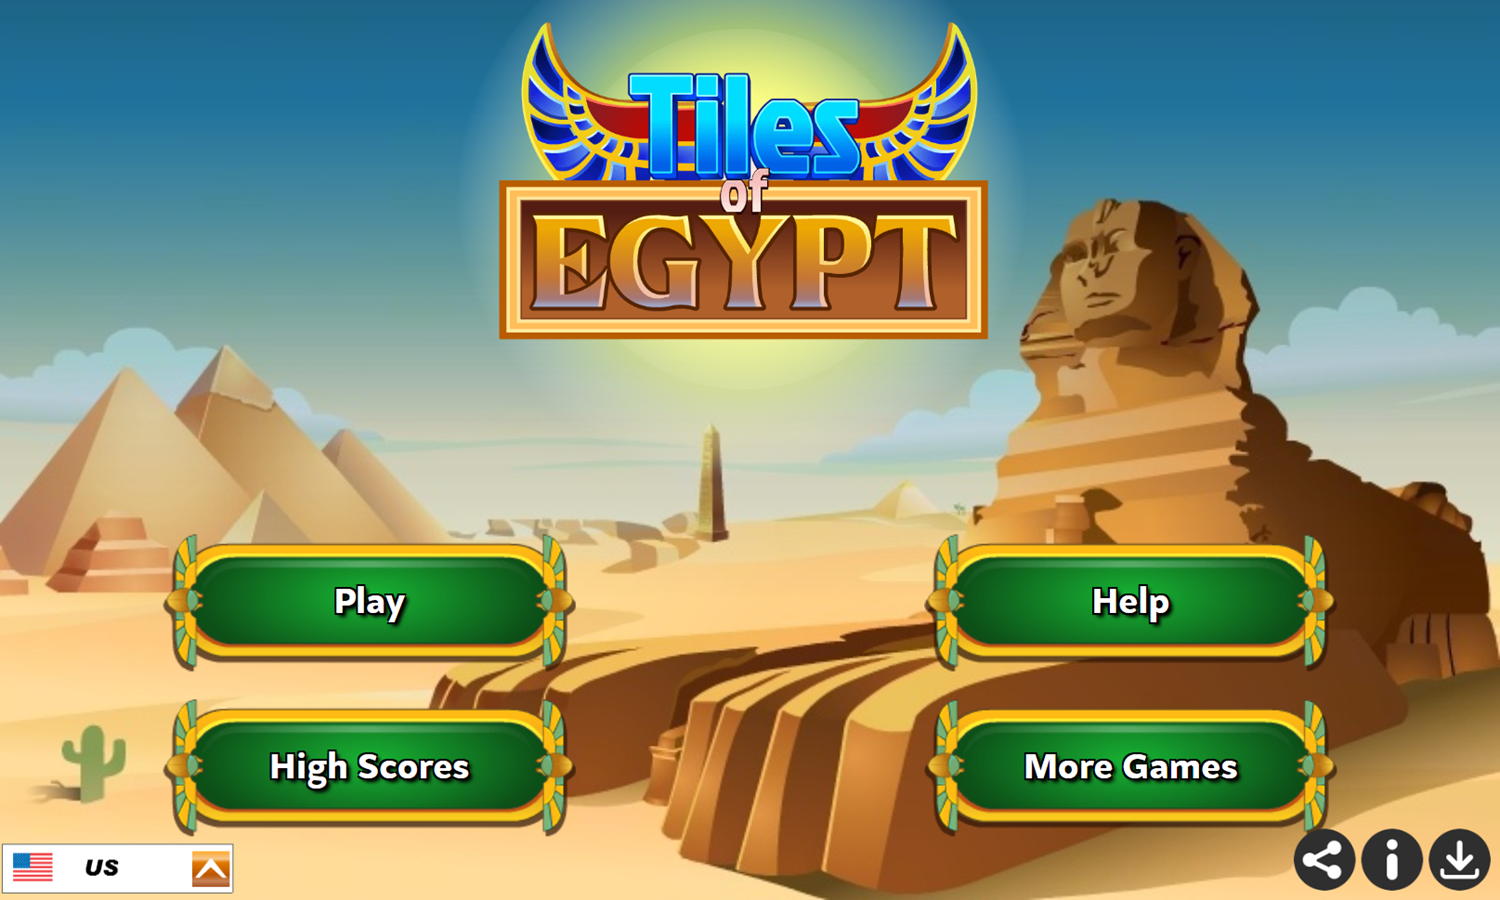 Tiles of Egypt Game Welcome Screen Screenshot.